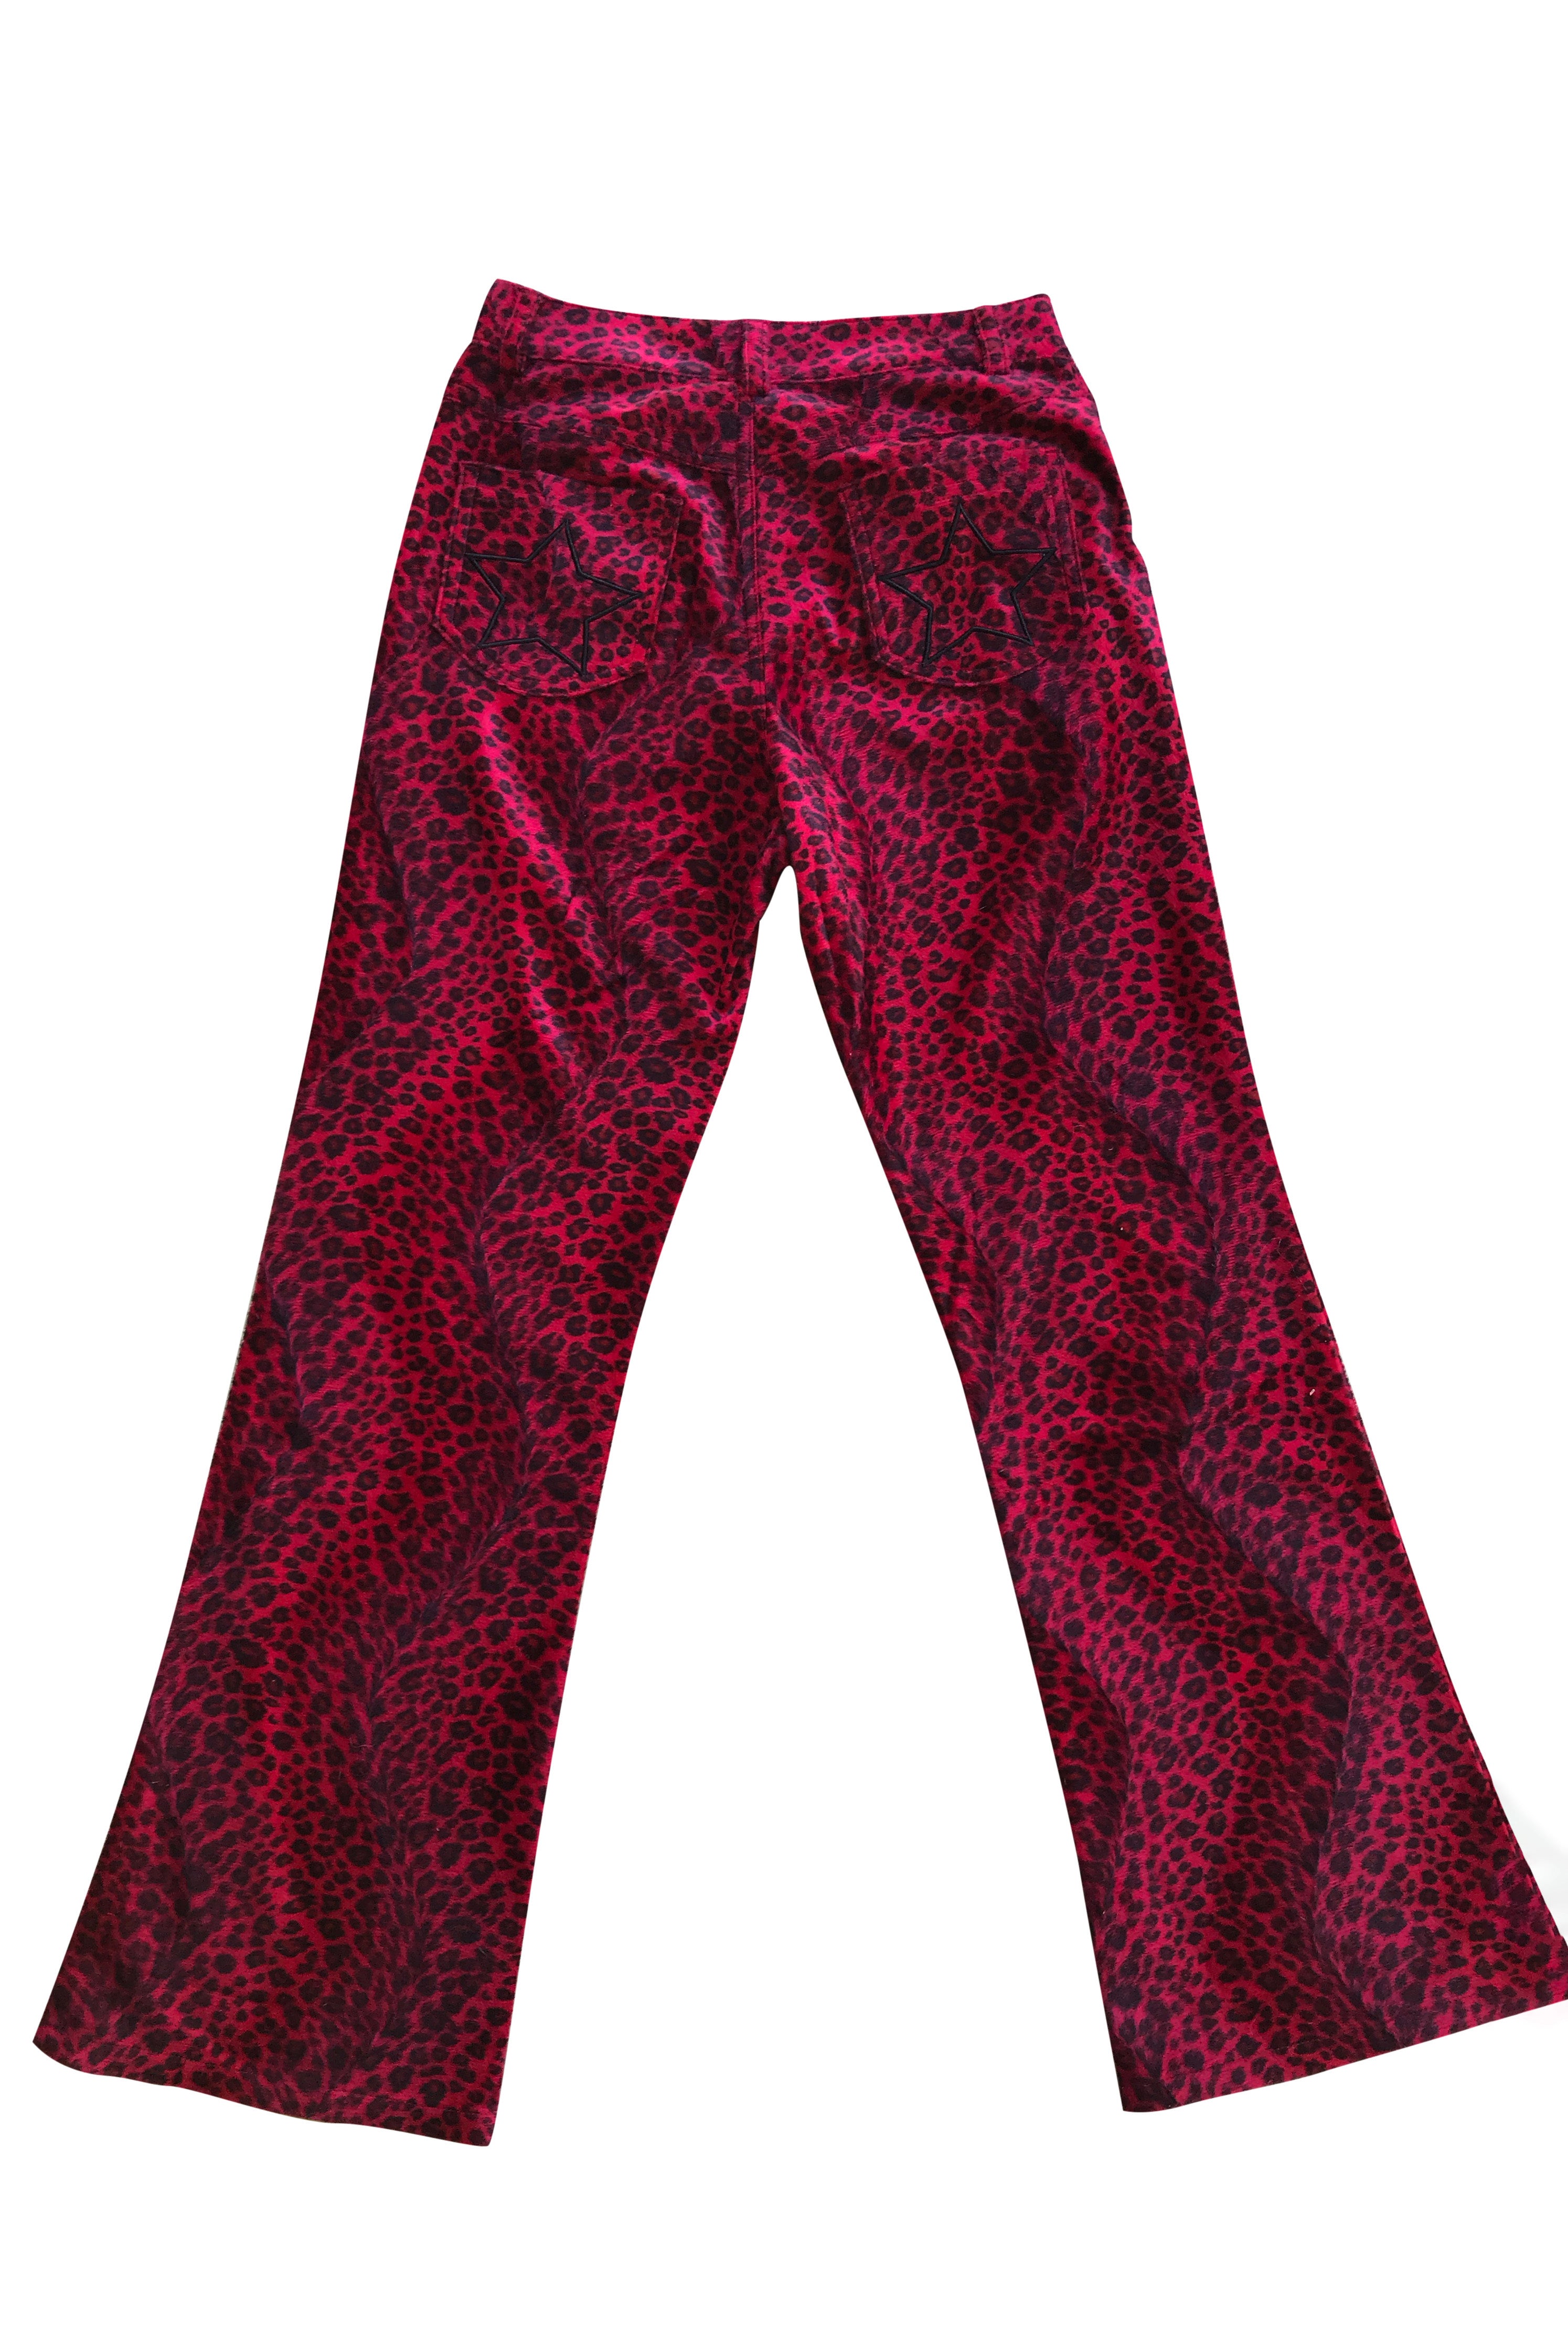 Vivian Red Cheetah Faux Fur Pants - Tunnel Vision - Women's - Bottoms